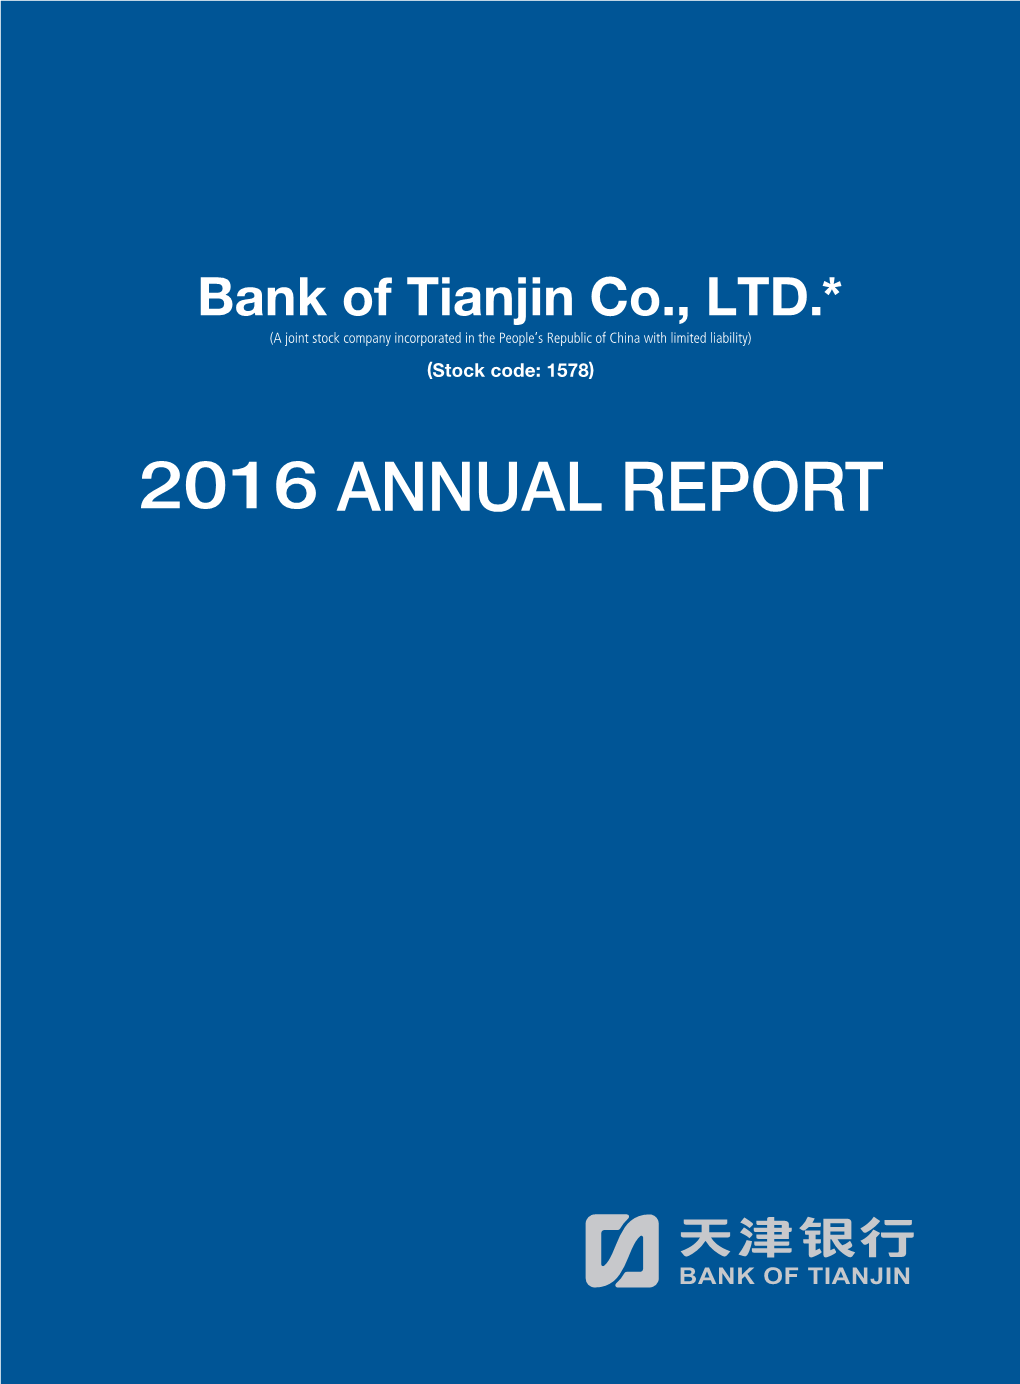 ANNUAL REPORT * Bank of Tianjin Co., Ltd